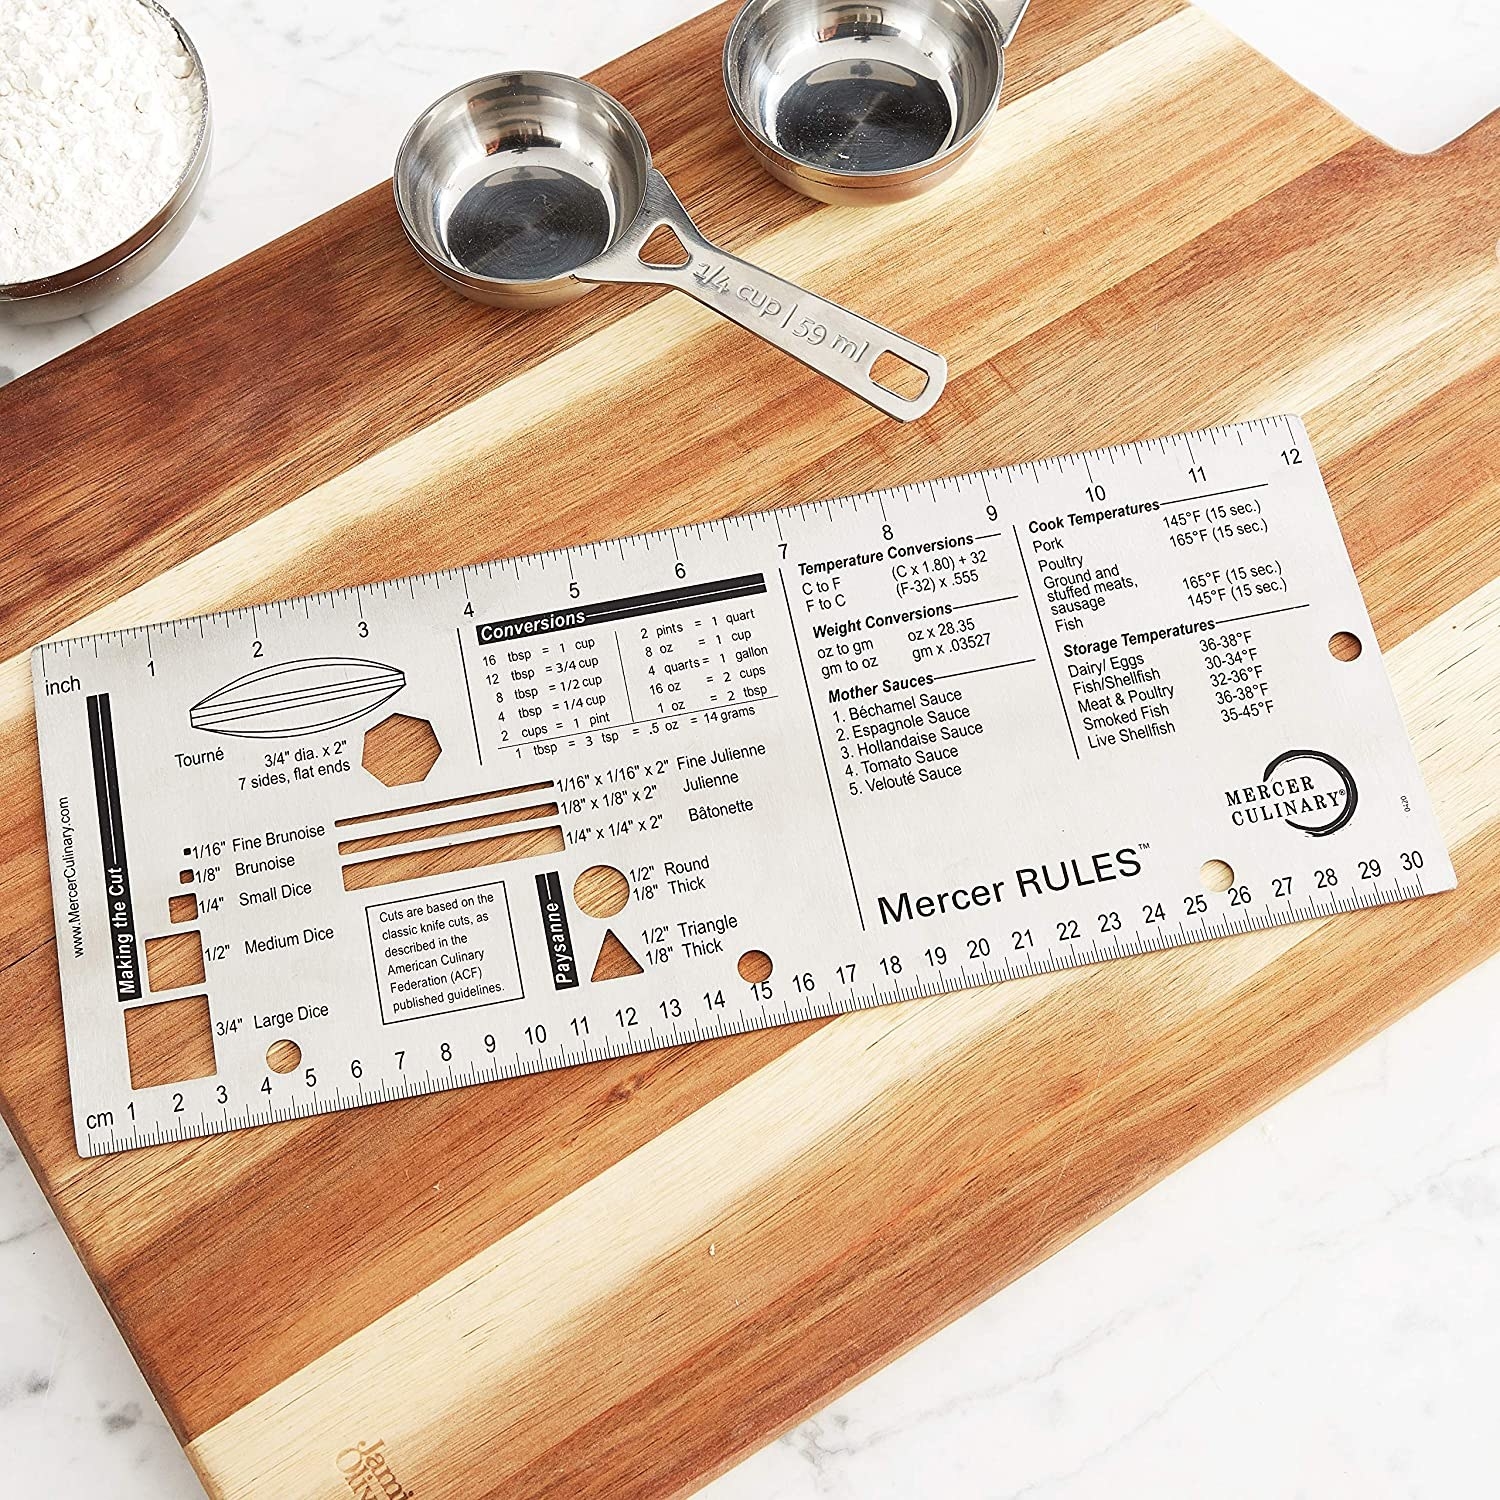 The culinary ruler on a cutting board